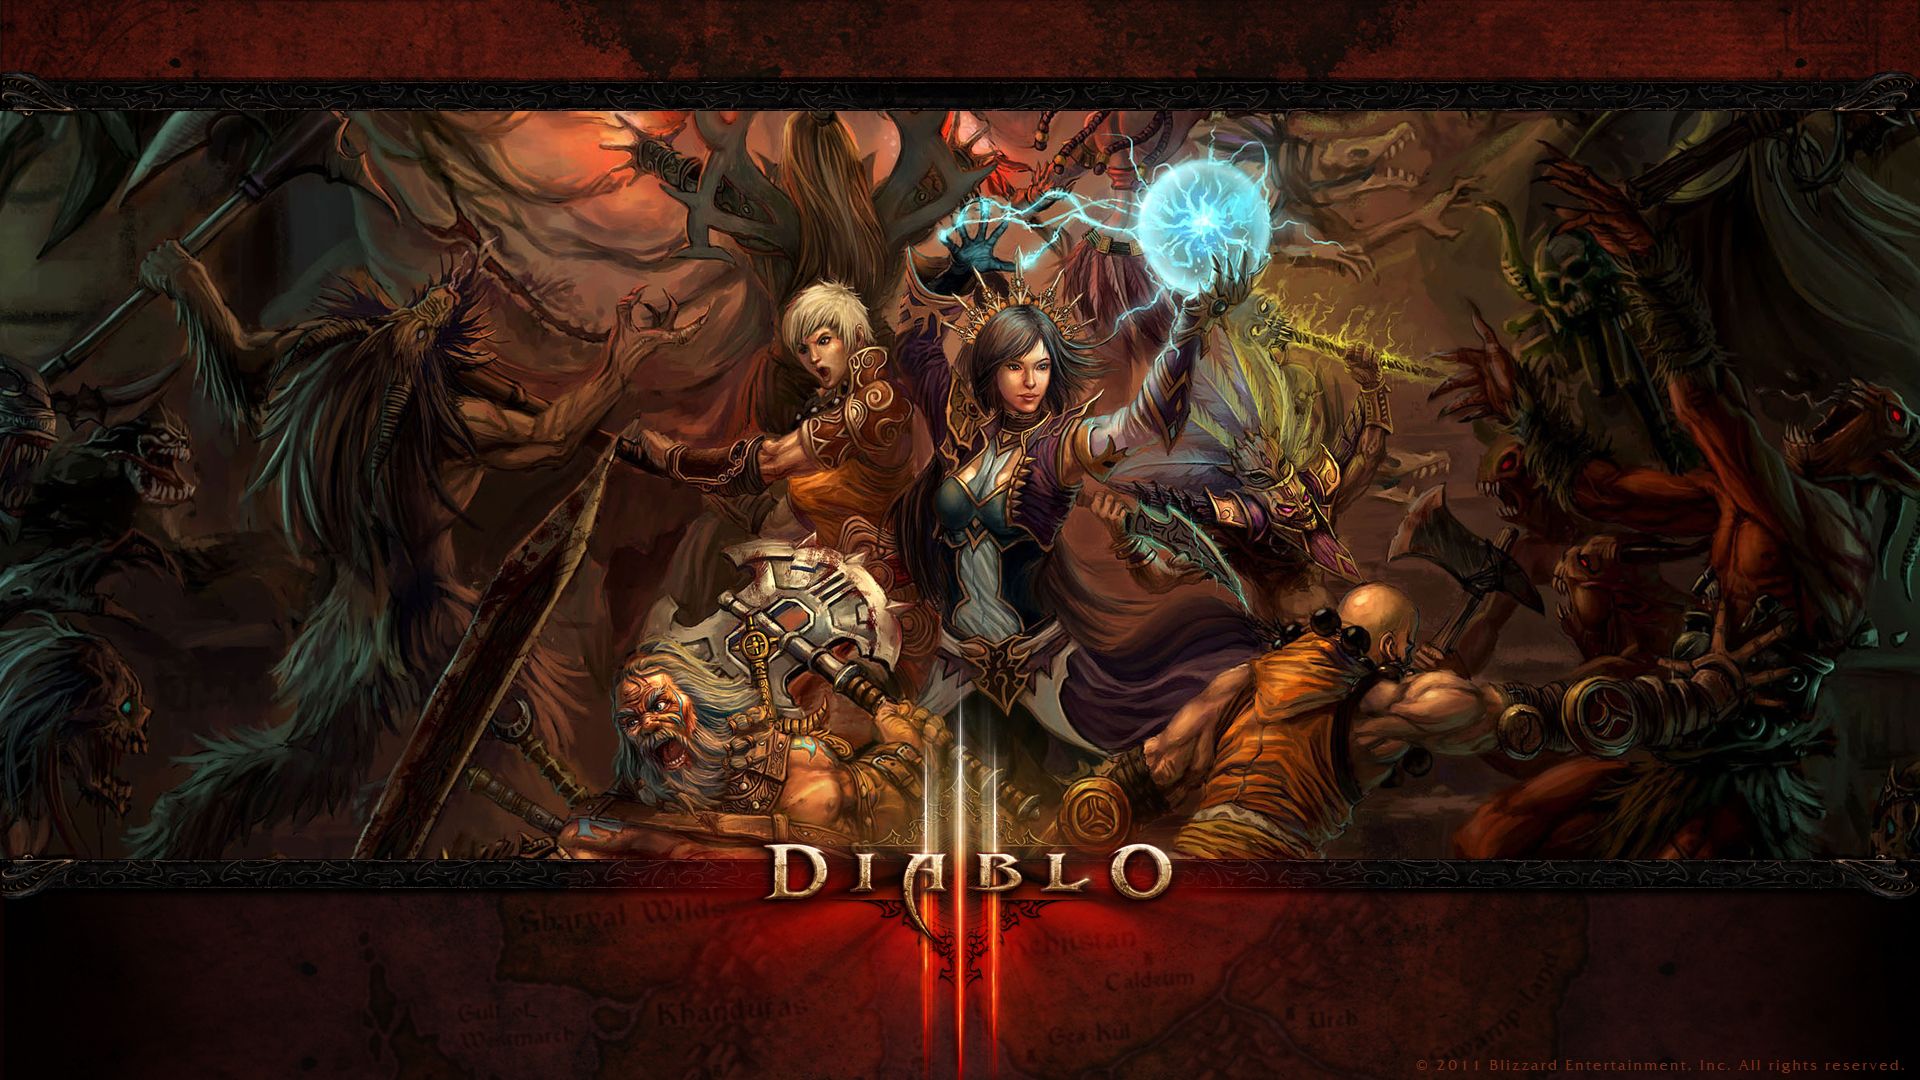  Diablo 3 1920x1080 Hintergrundbild 1920x1080. Diablo 3 Battle wallpaper. Diablo 3 Battle